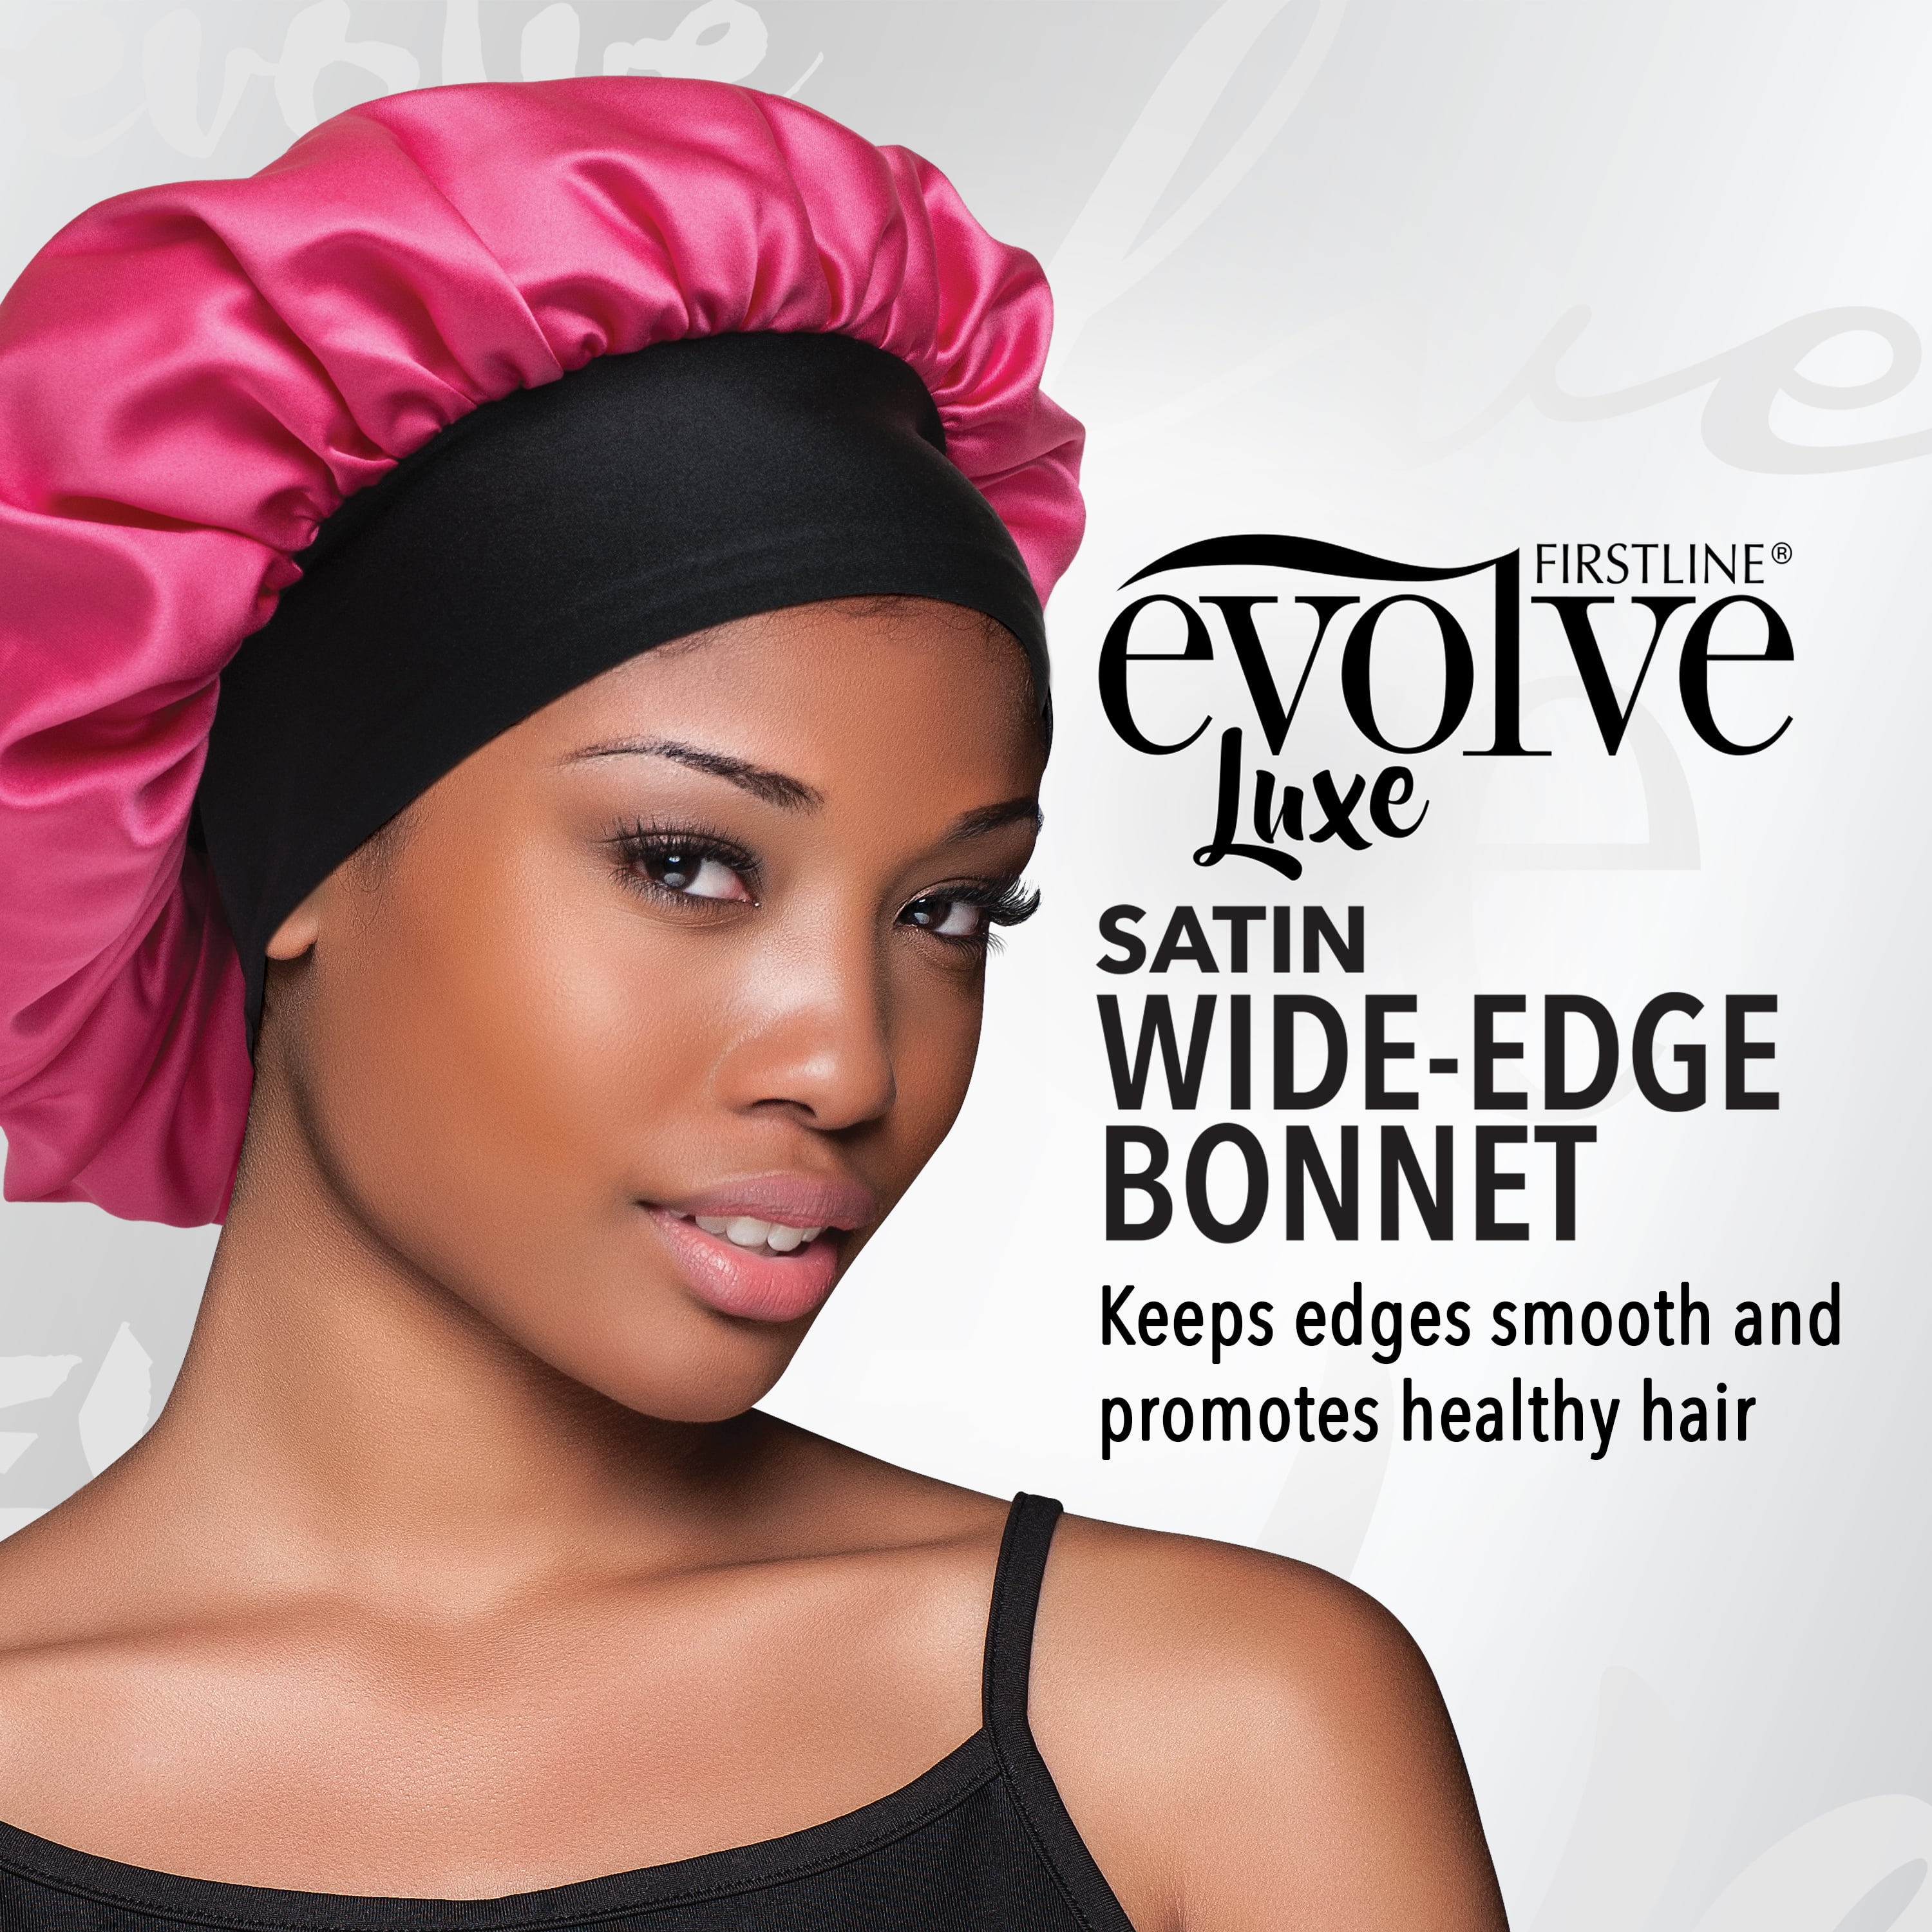 LV Bonnet – Versatile Beauty by Verlytia LLC.